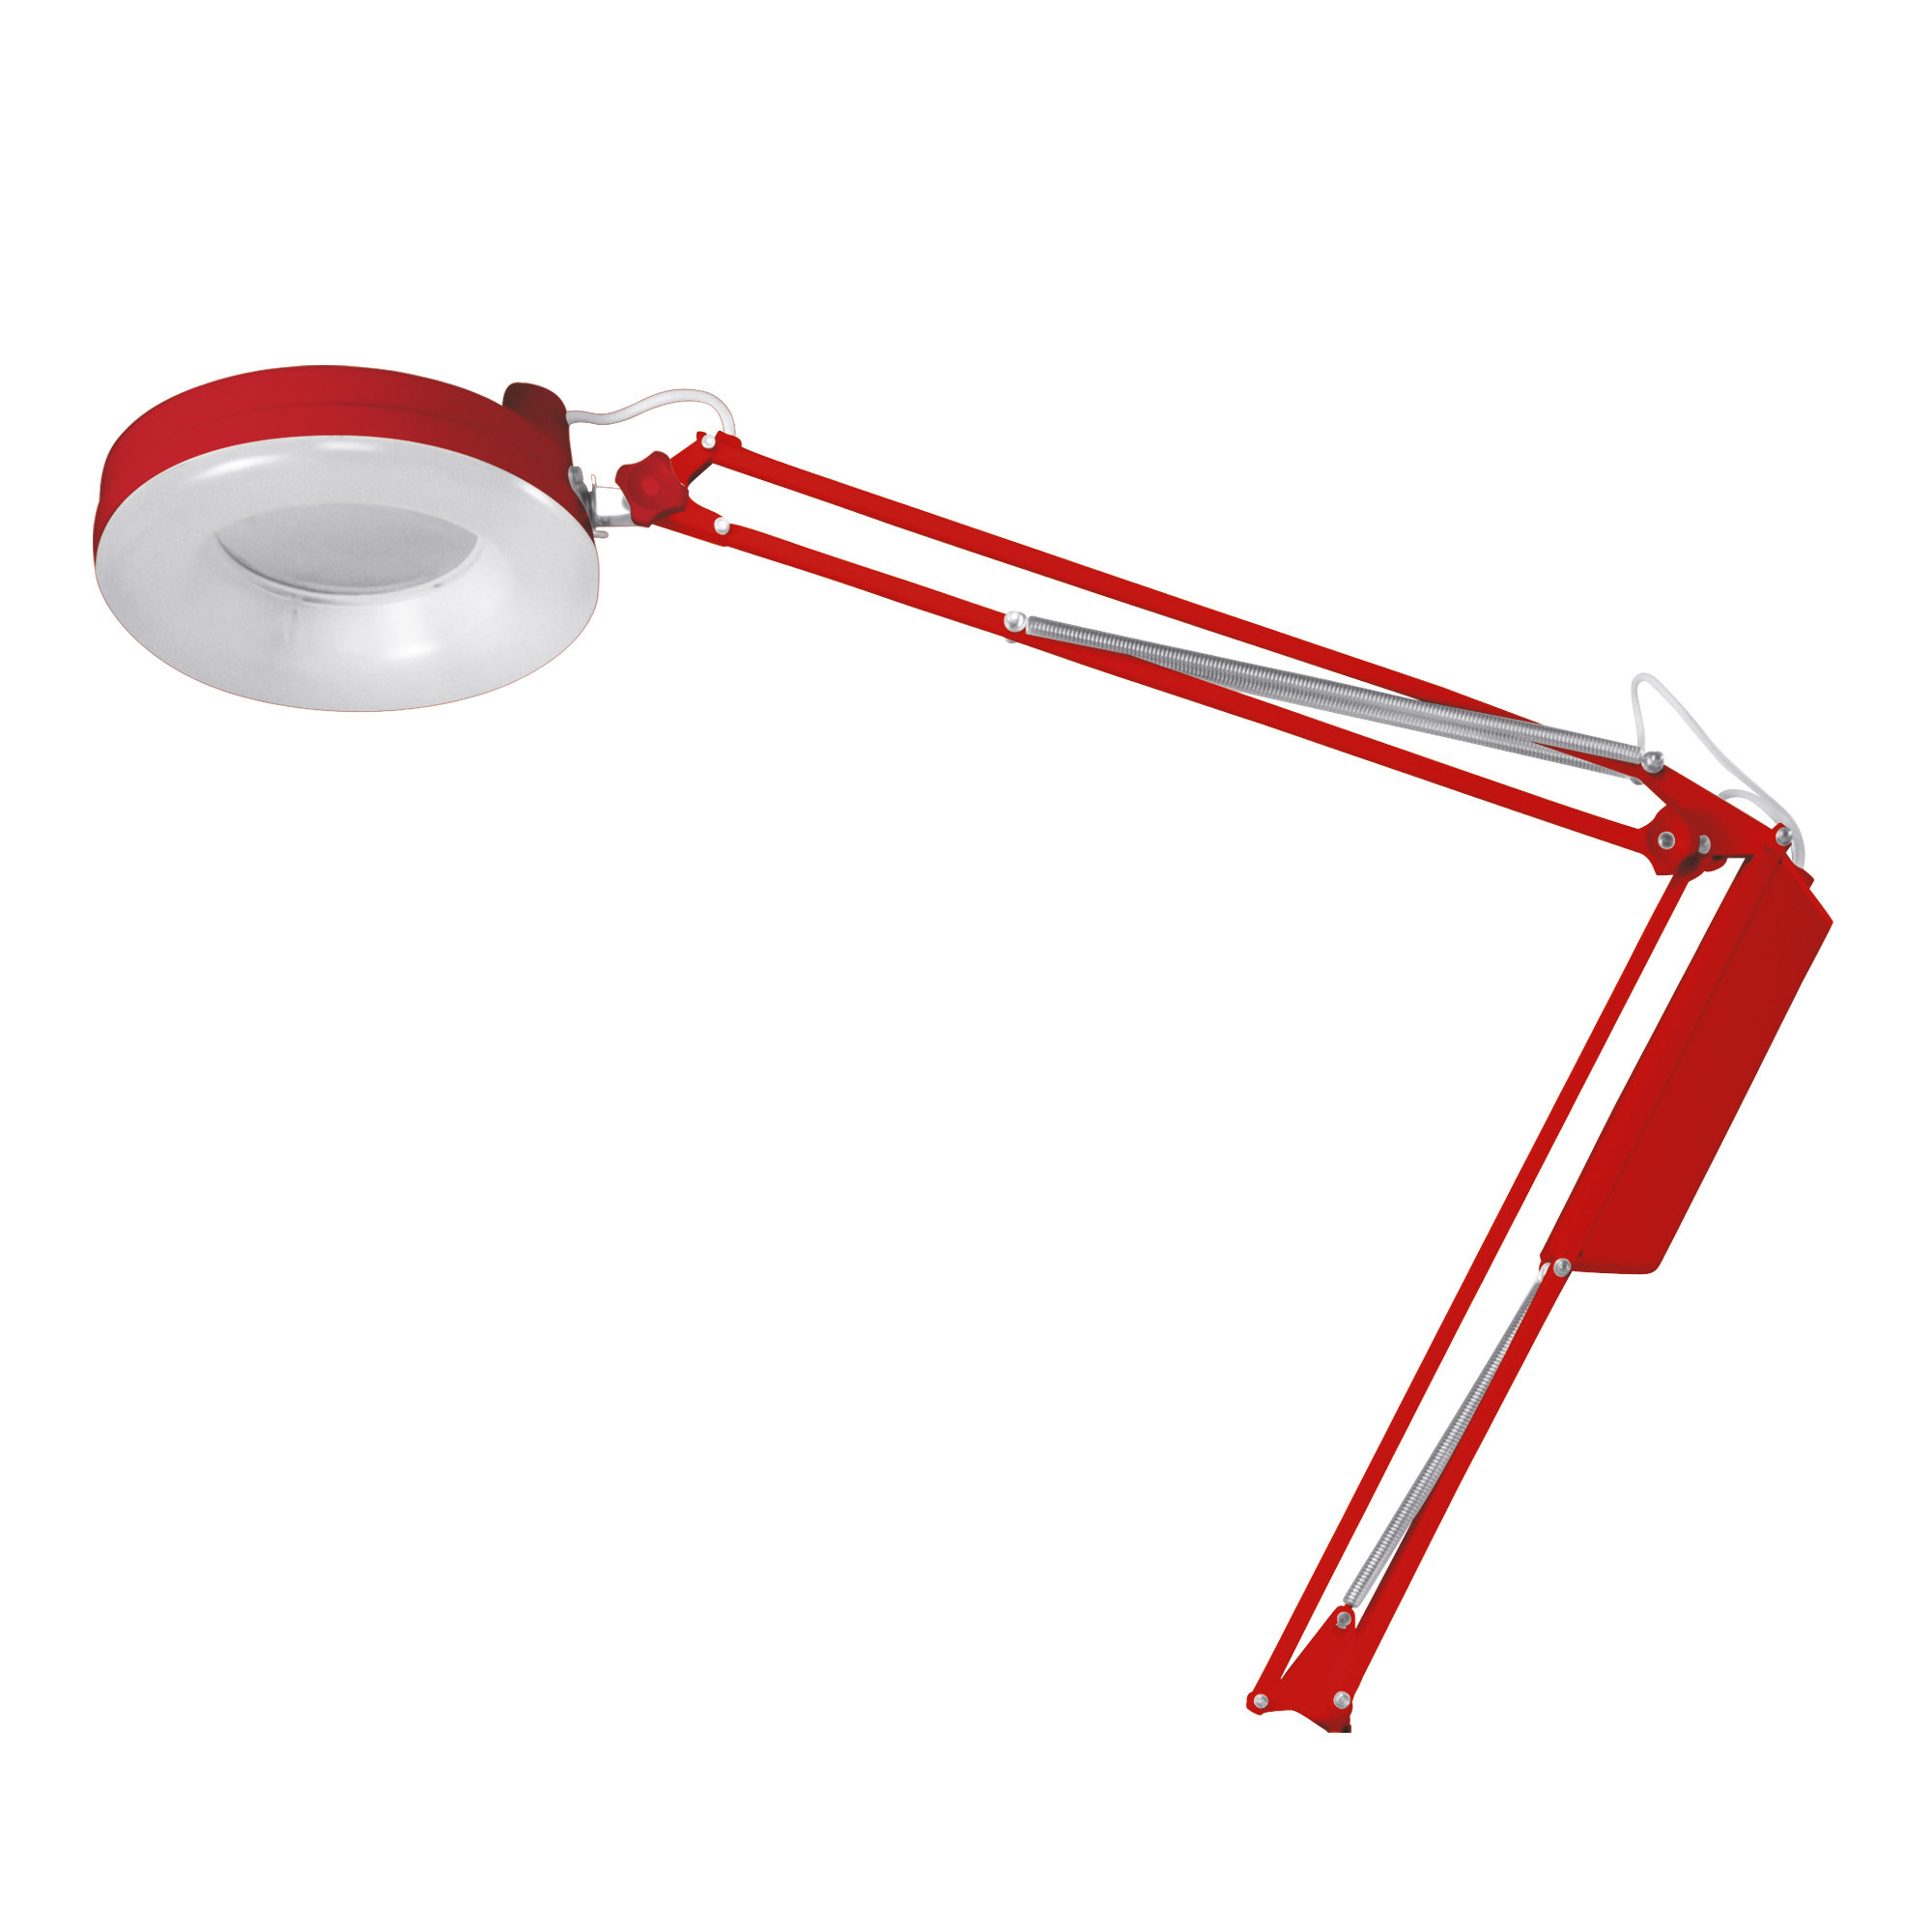 Afma-Lampe mit Neonlicht und roter 5-Diopter-Lupe